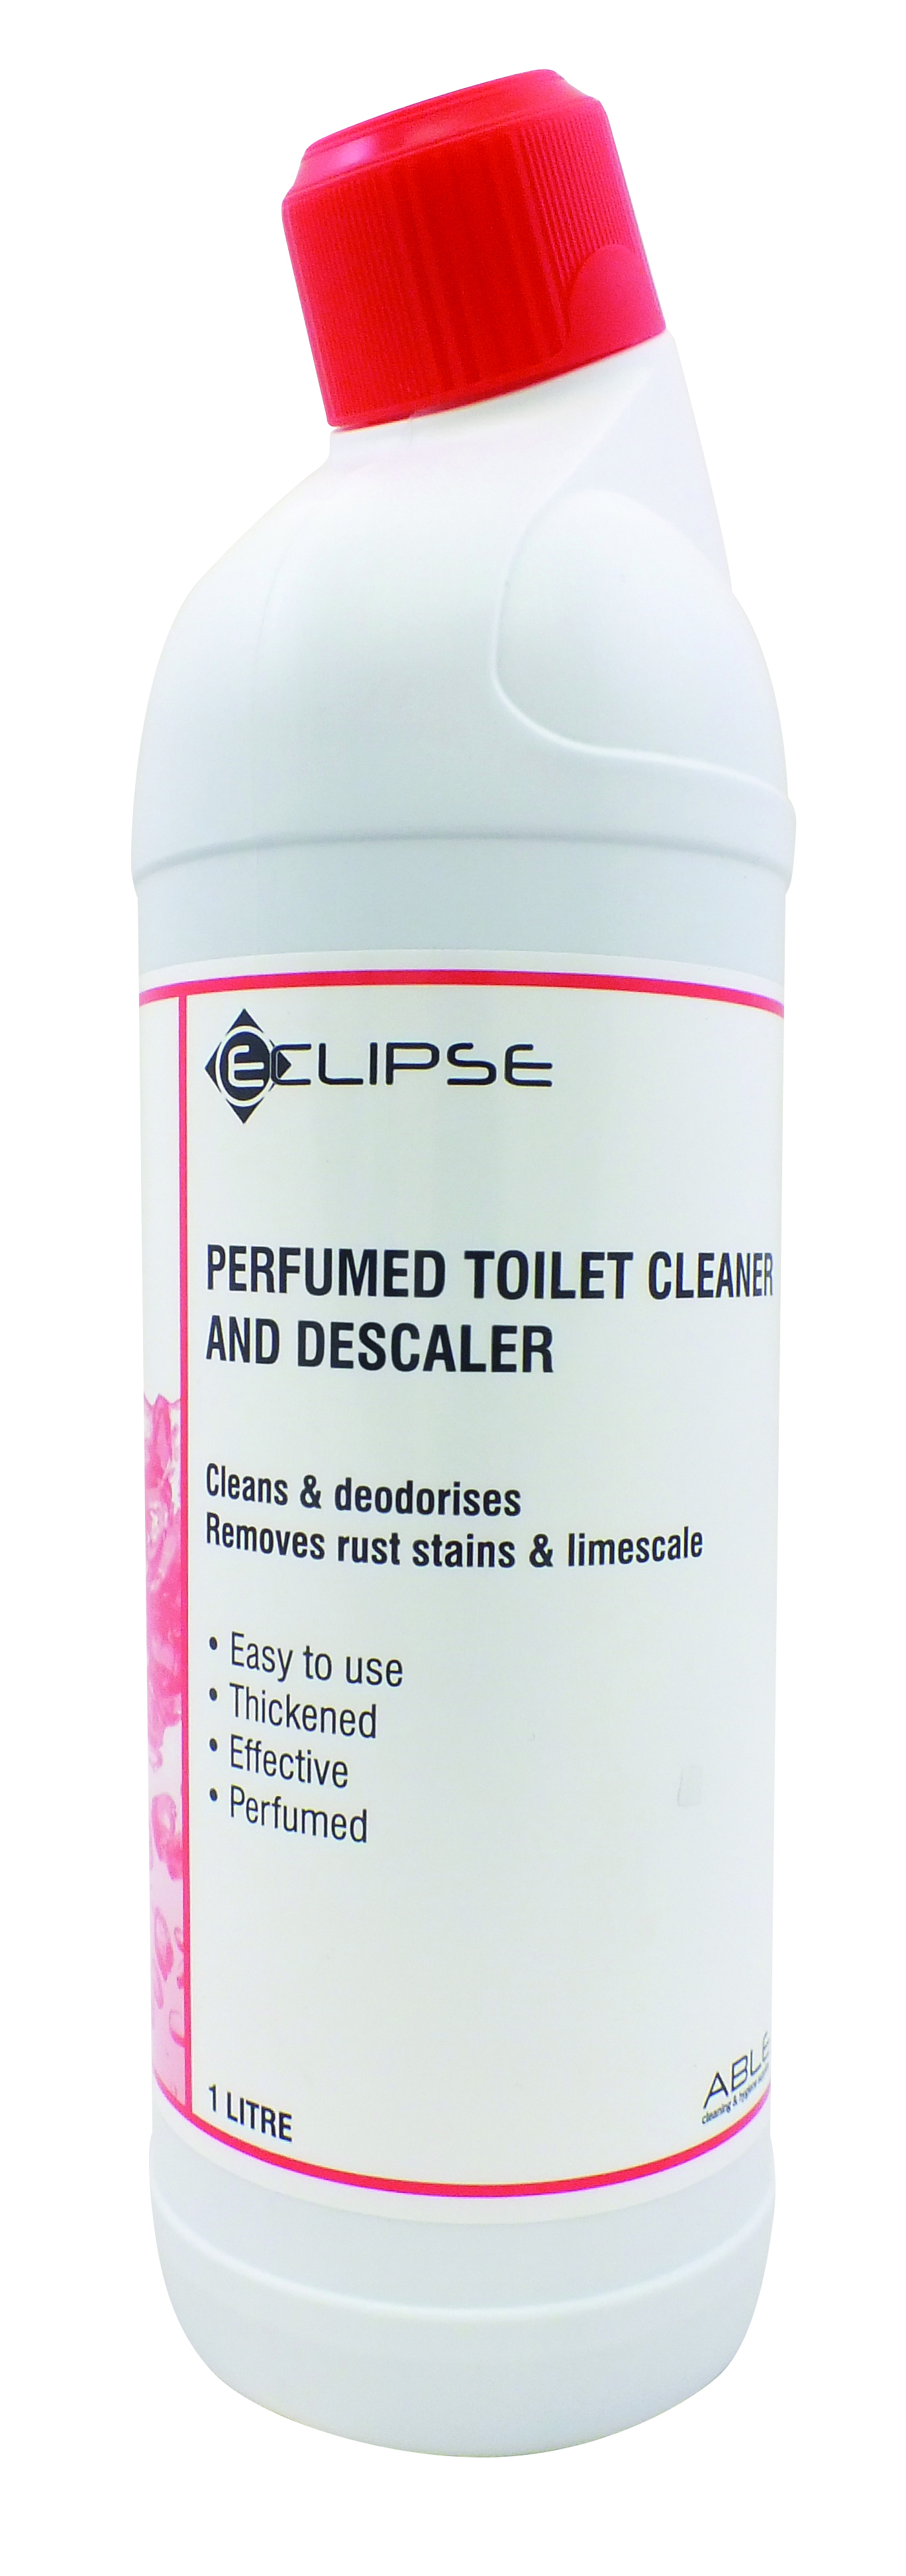 Eclipse Perfumed Toilet Cleaner/Descaler